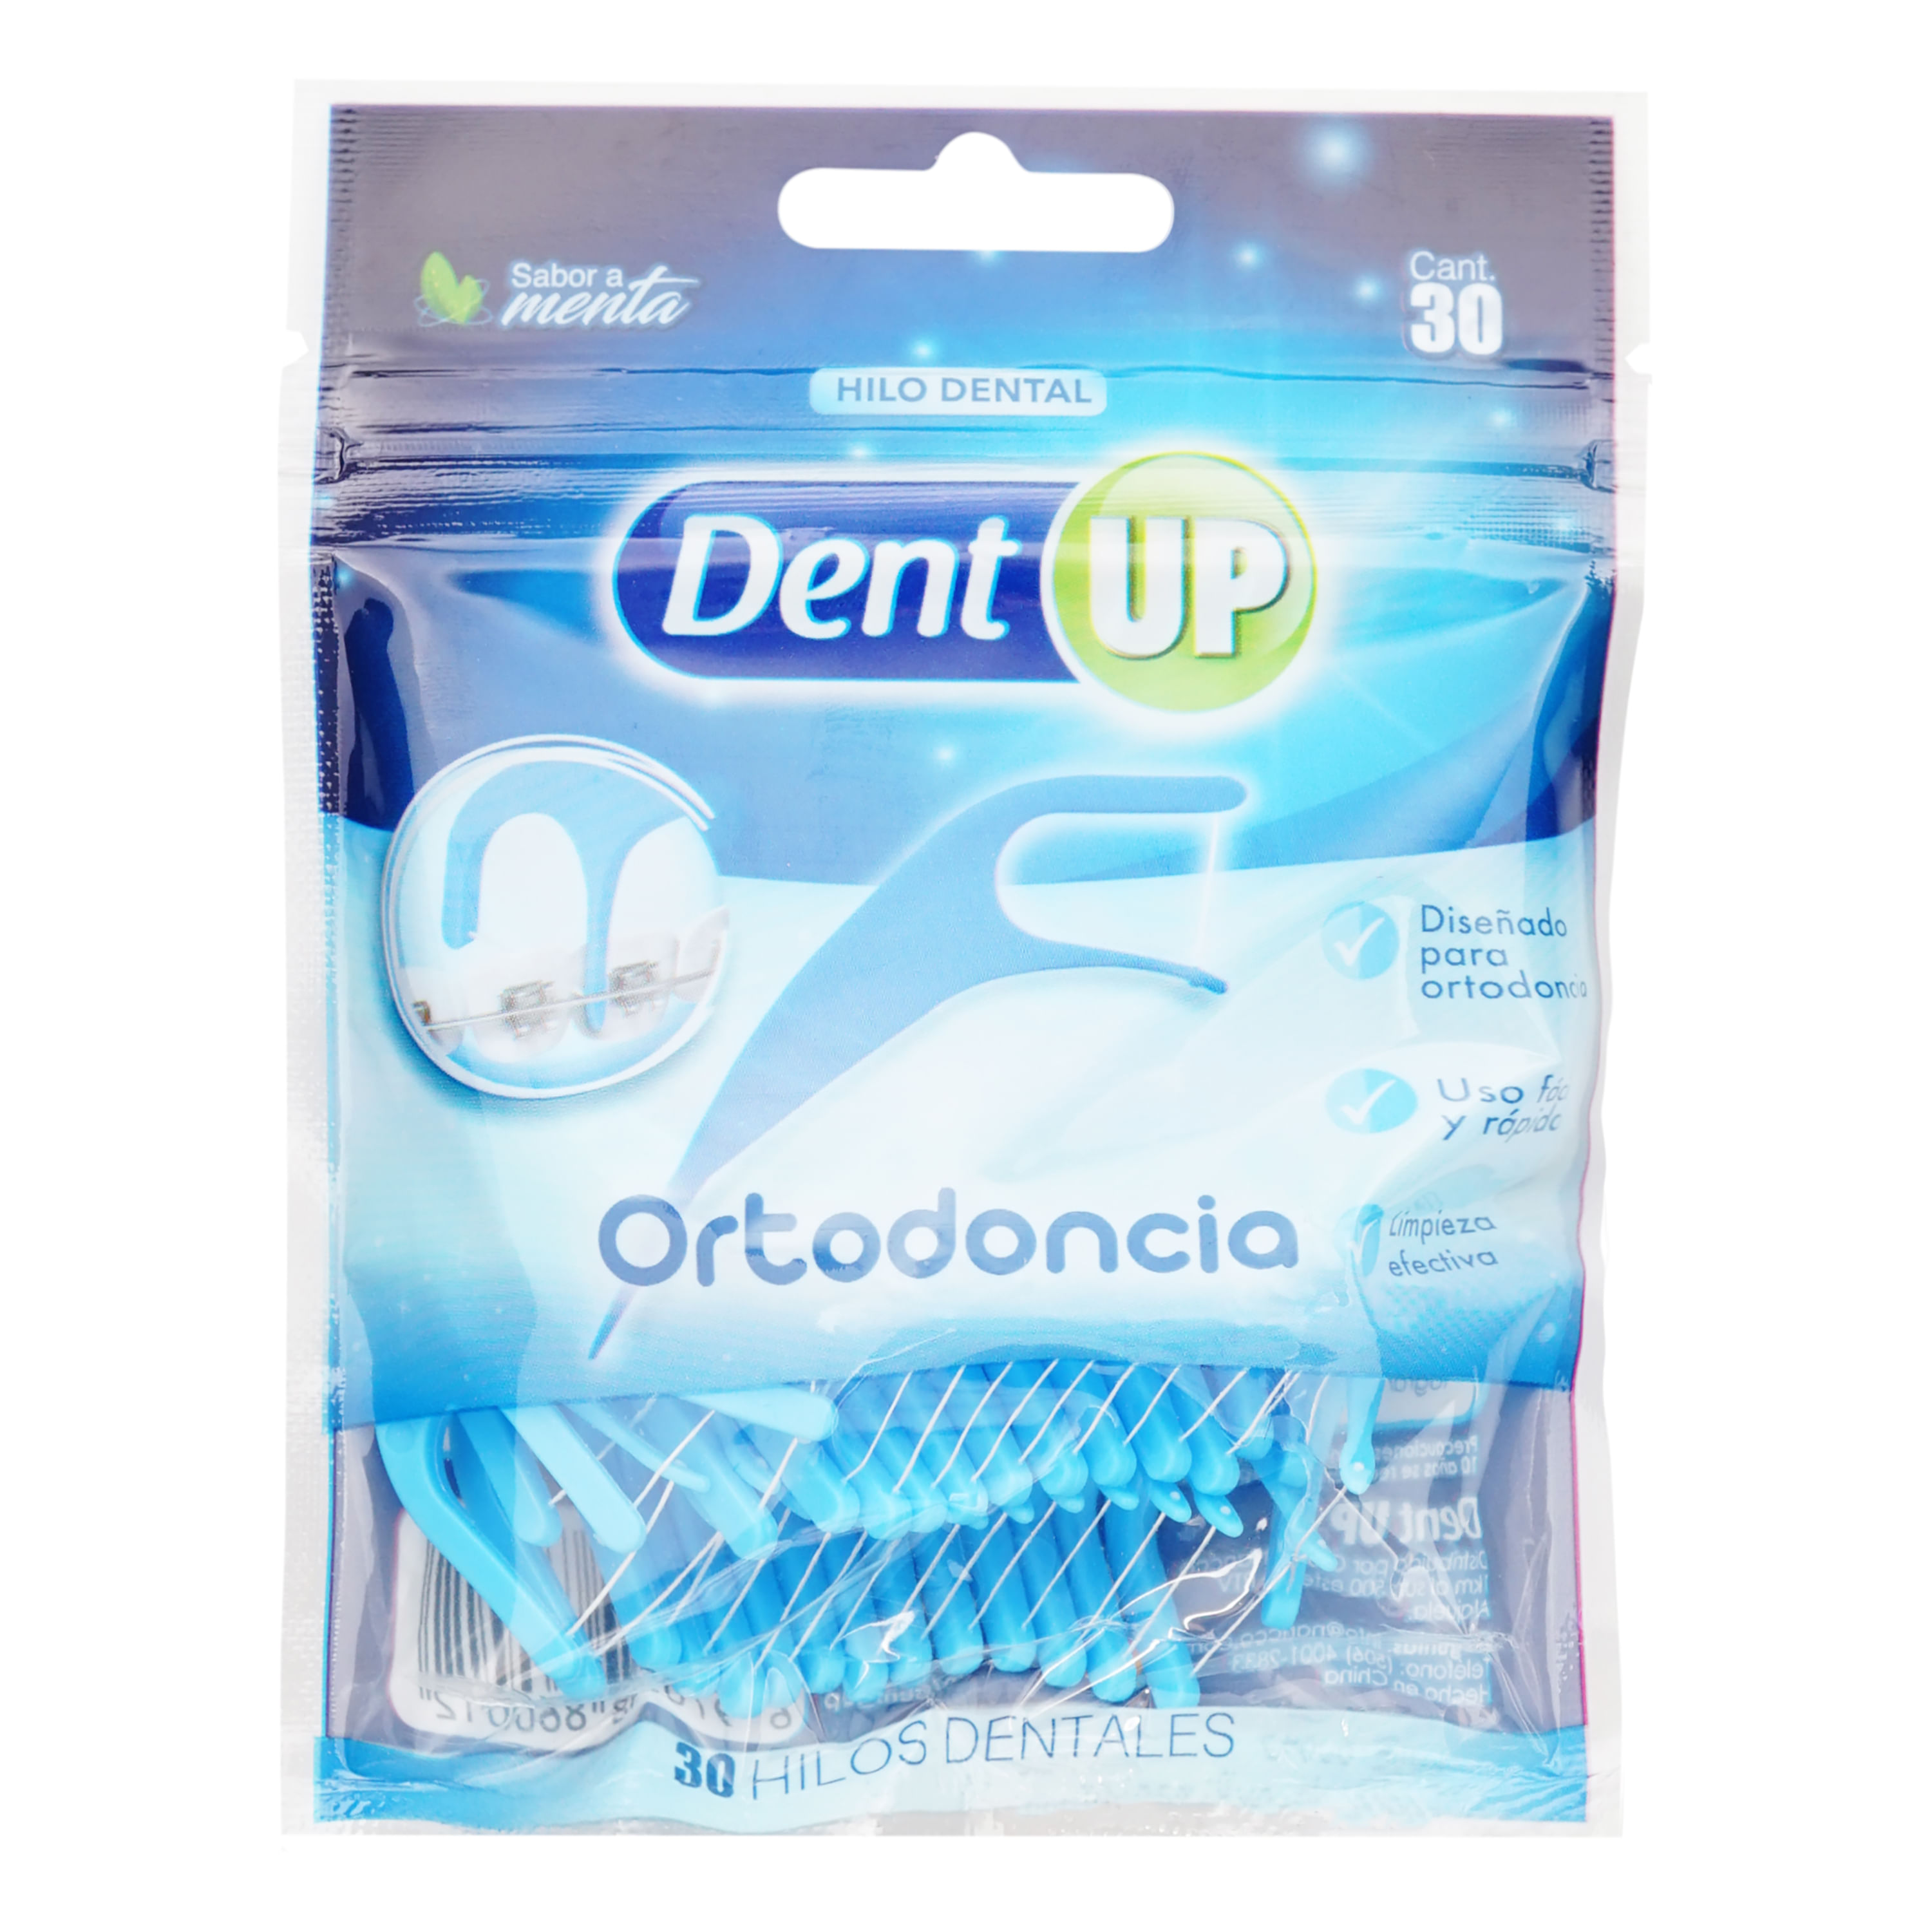 Ortodoncia-Dentup-Floss-Picks-30Un-1-39132